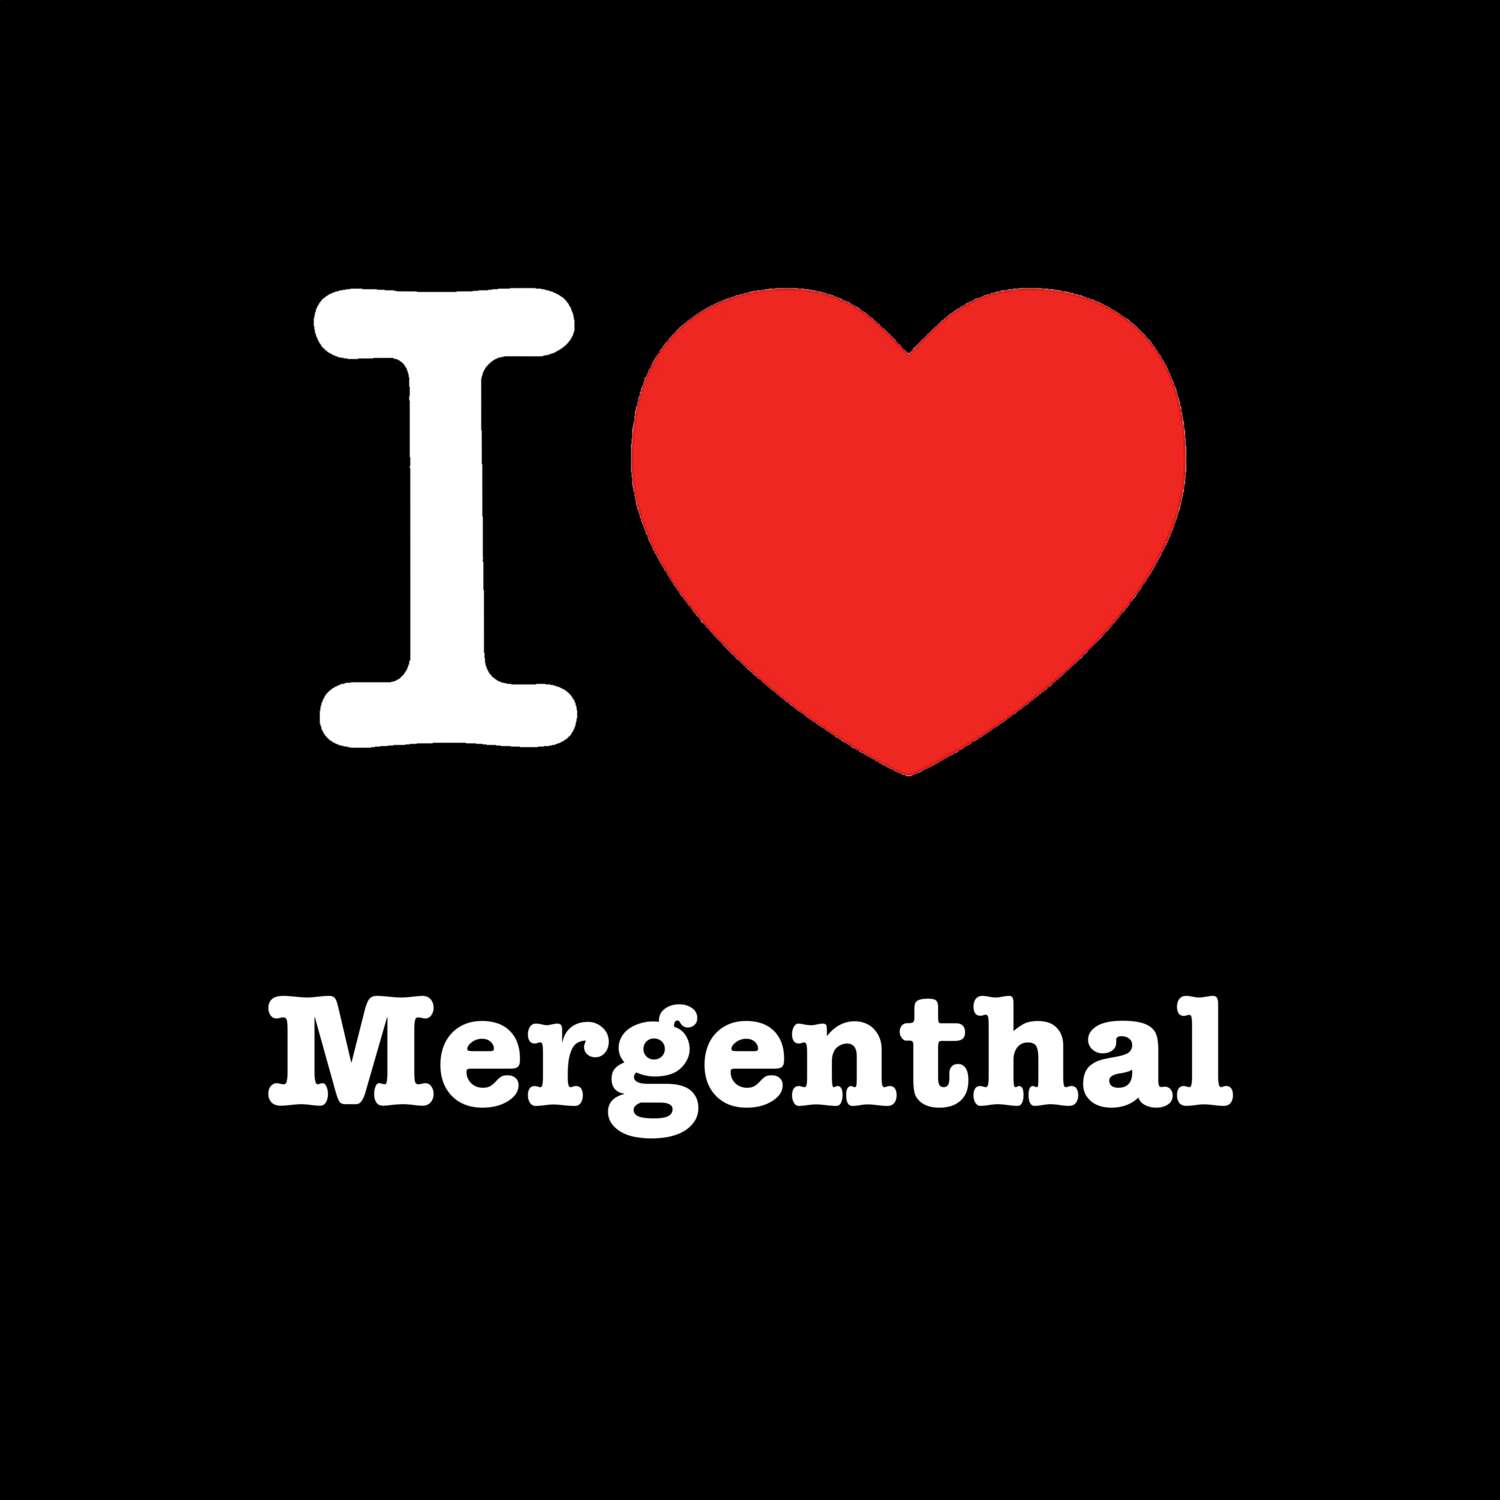 Mergenthal T-Shirt »I love«